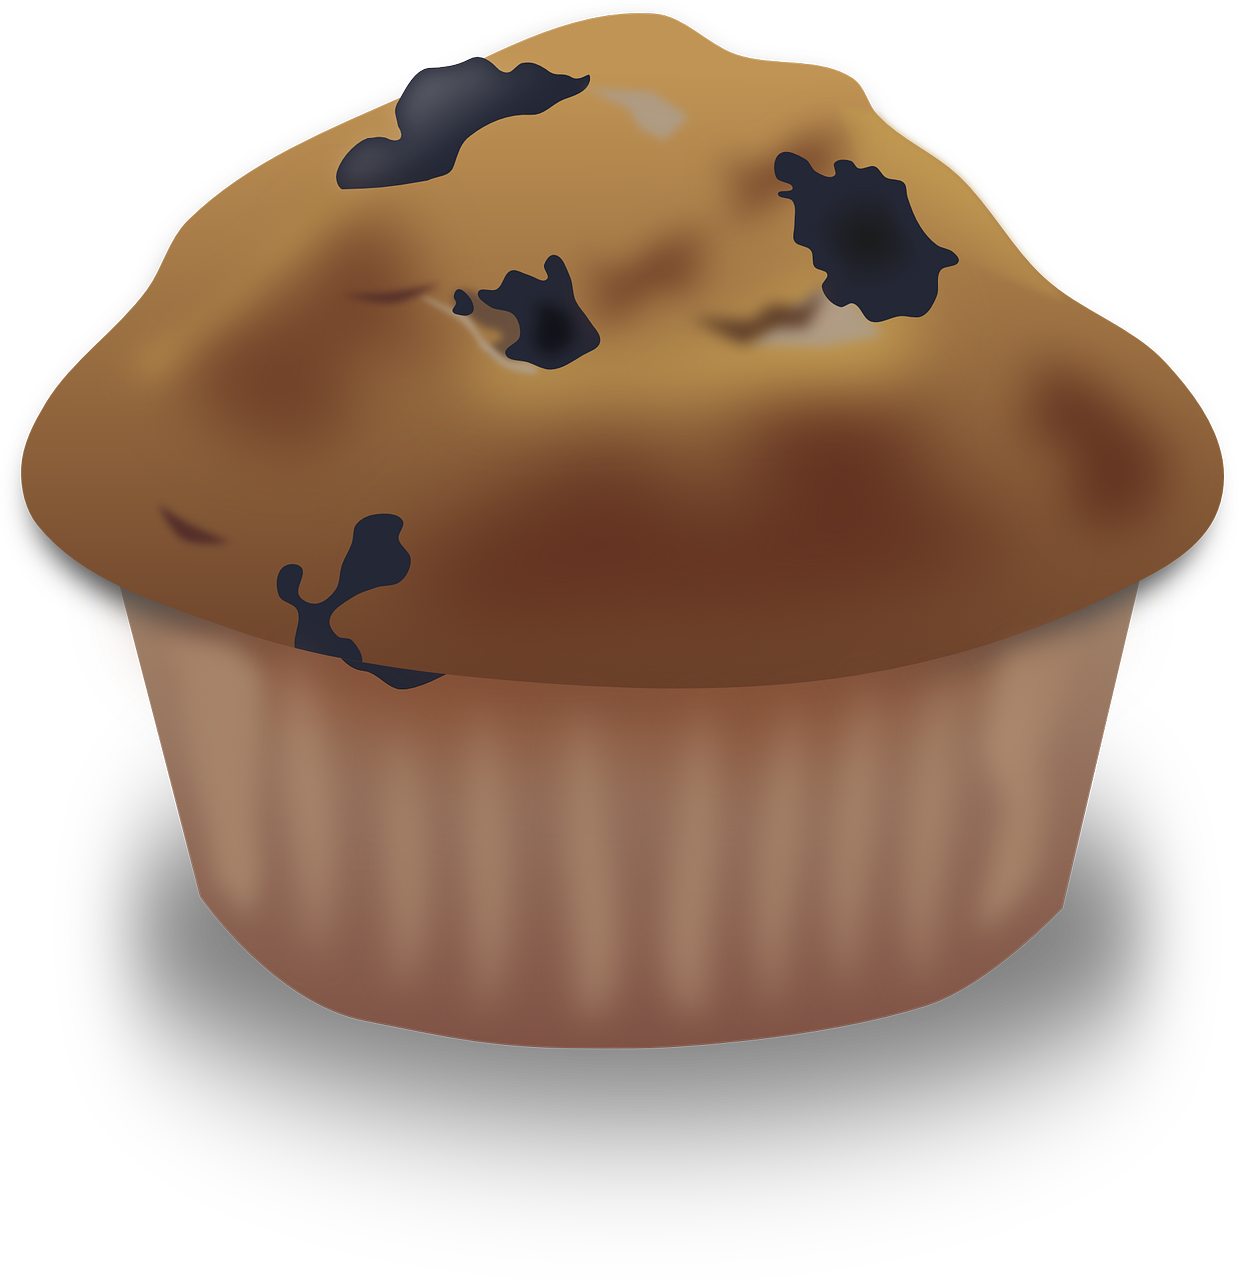 cupcake muffin blueberry muffin free photo